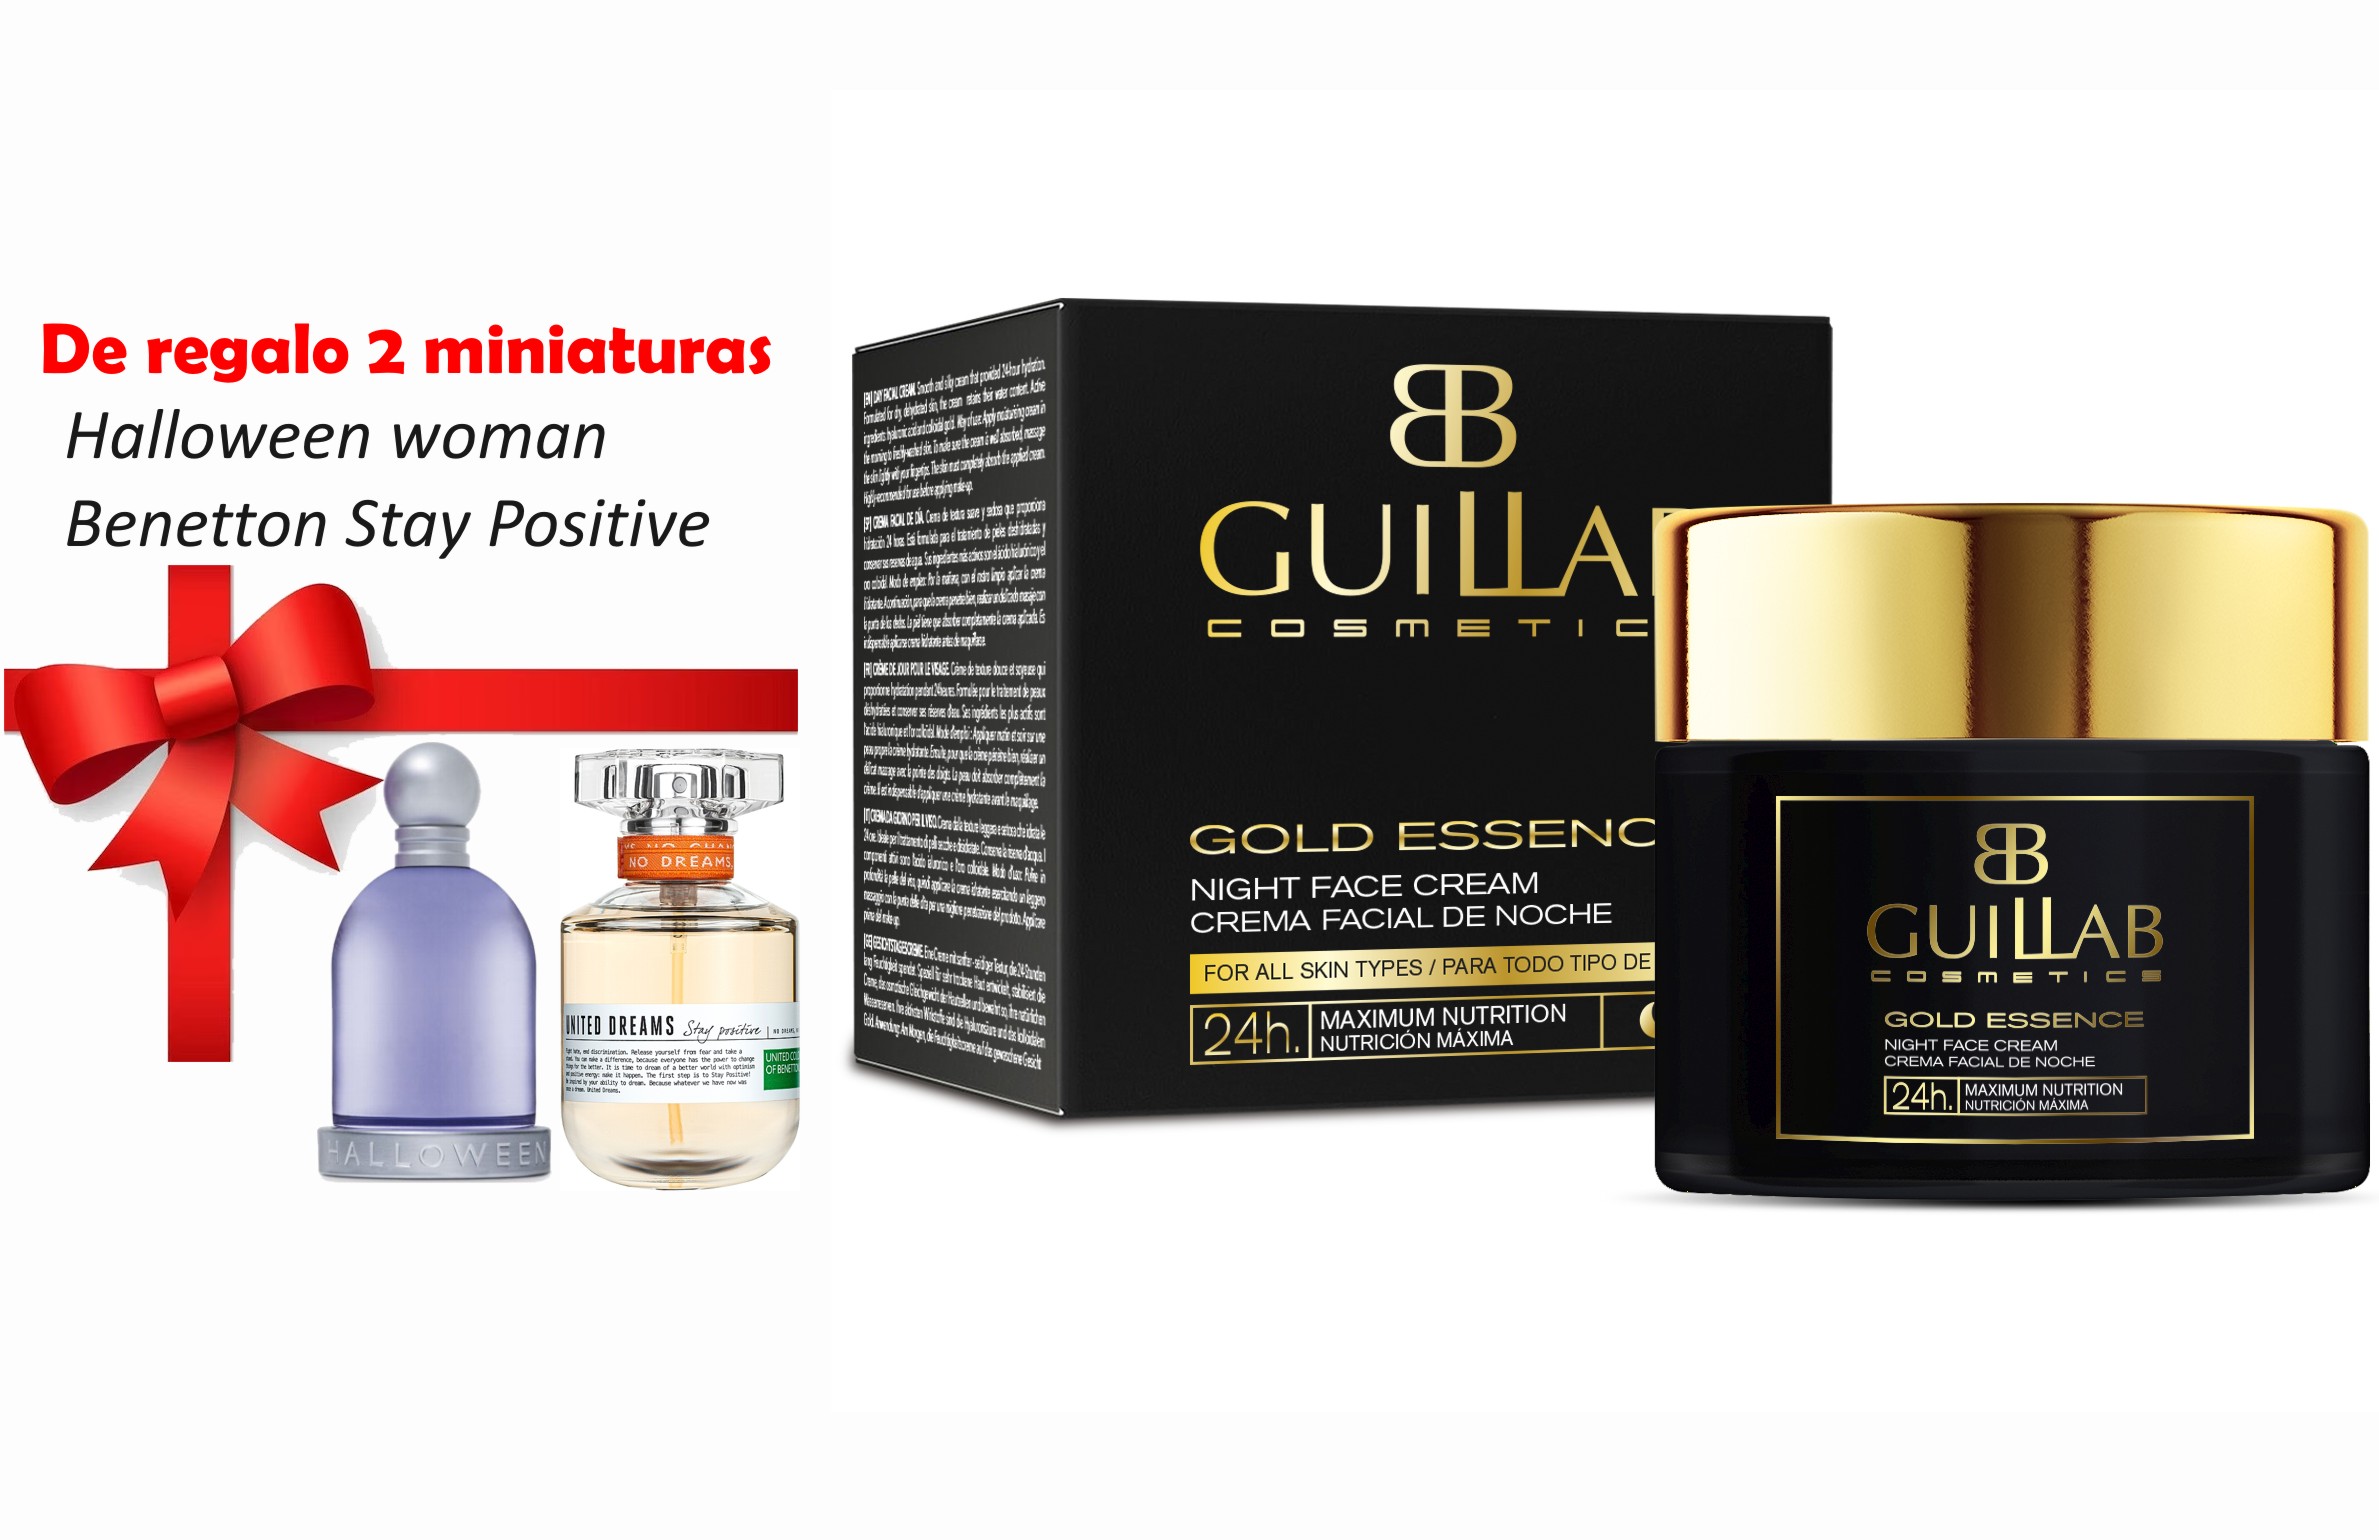 GUILLAB COSMETICS GOLD ESSENCE NIGHT CREAM 50 ML REGULAR + 2 MINIATURAS DE REGALO